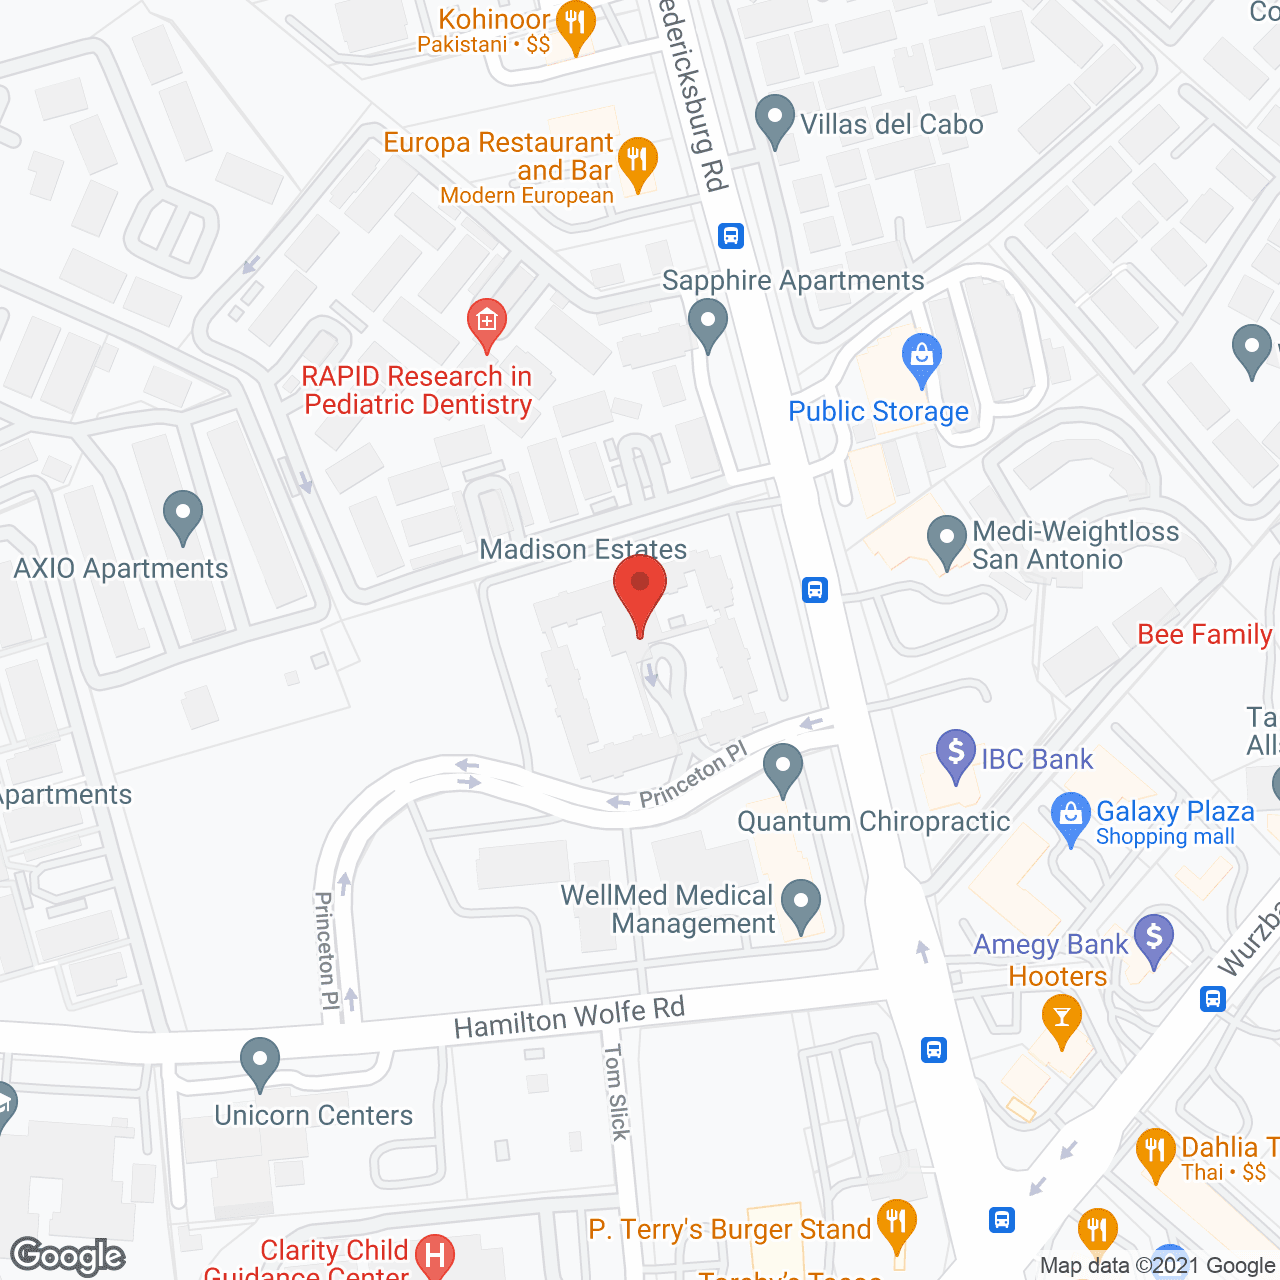 Madison Estates in google map